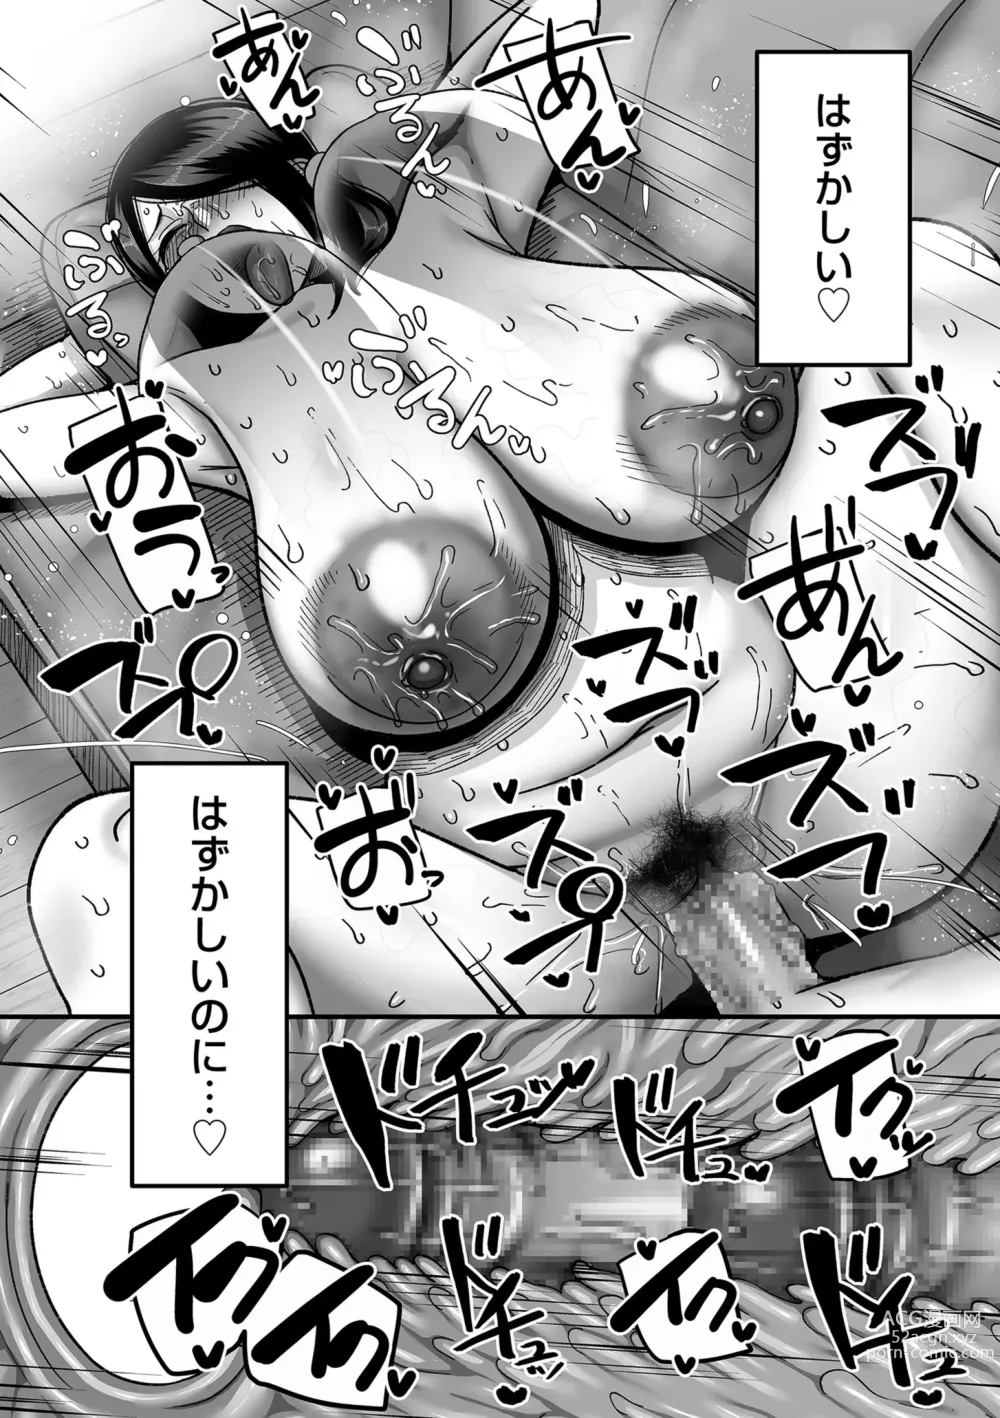 Page 228 of manga Nijuunen (Fu) Itchi